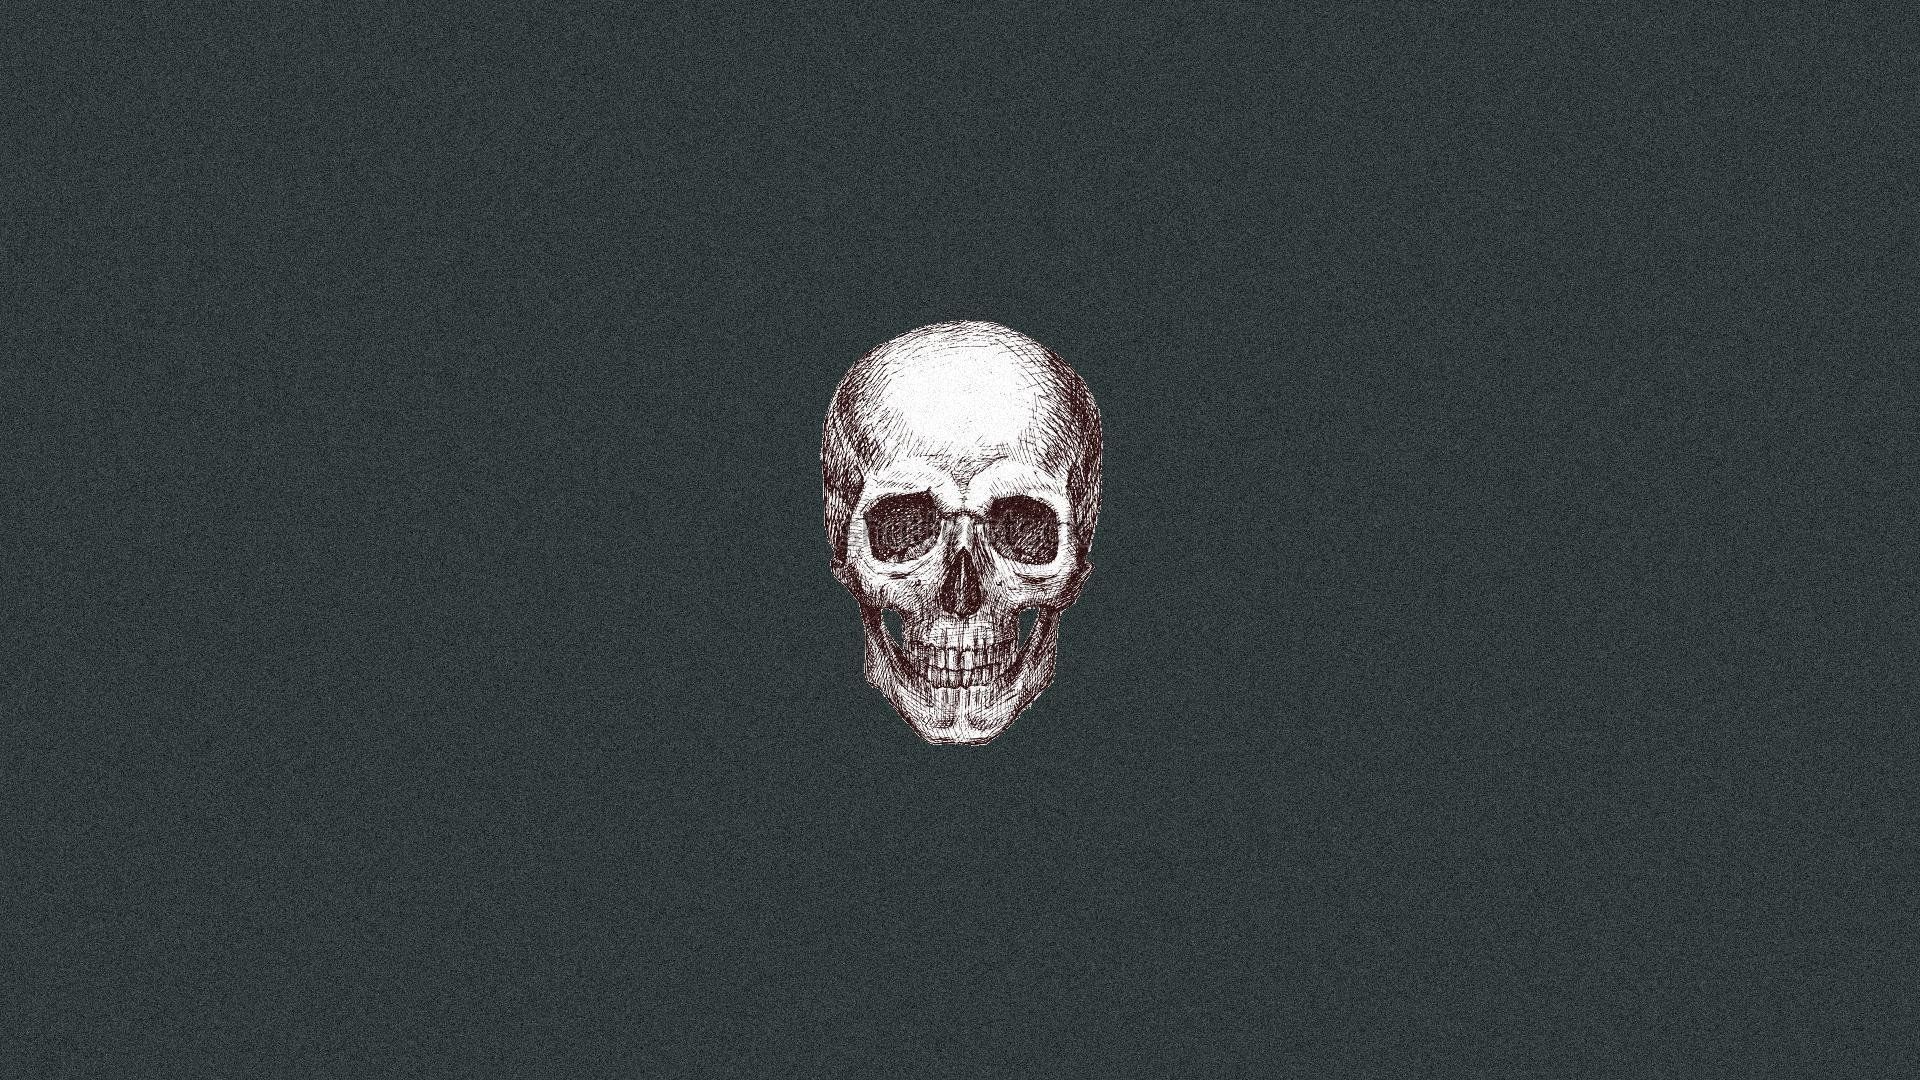 A skull on a black background - Skull